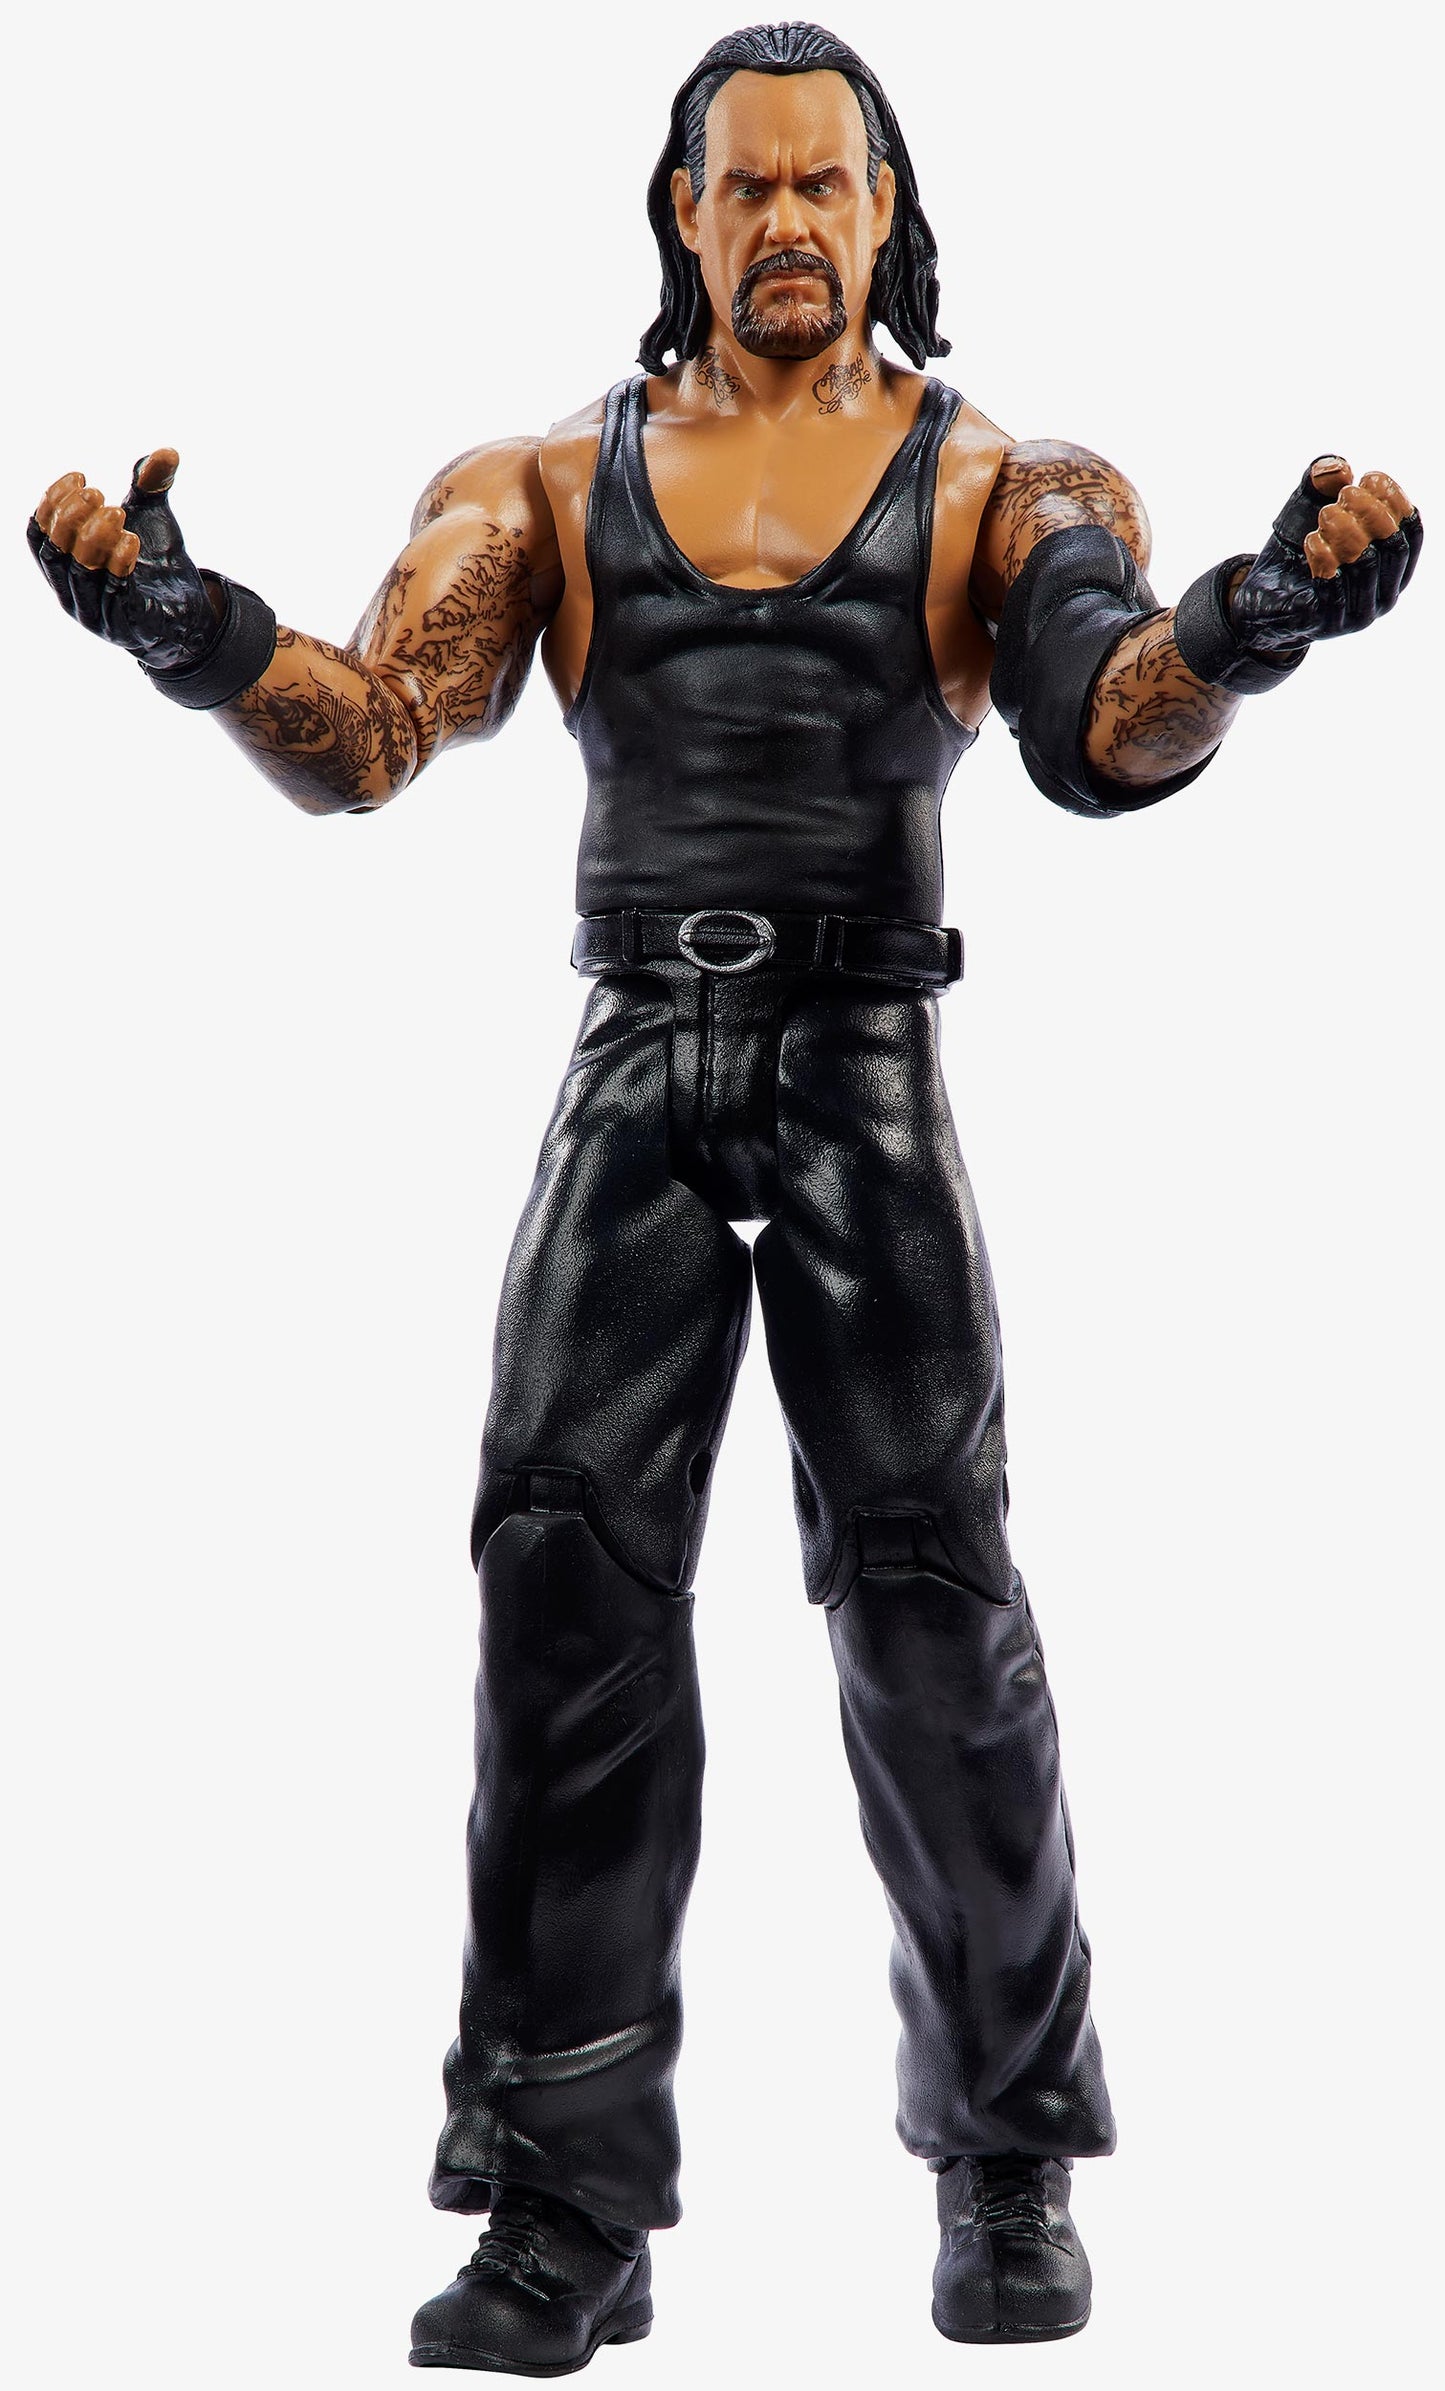 Undertaker WWE WrestleMania 39 Basic Series